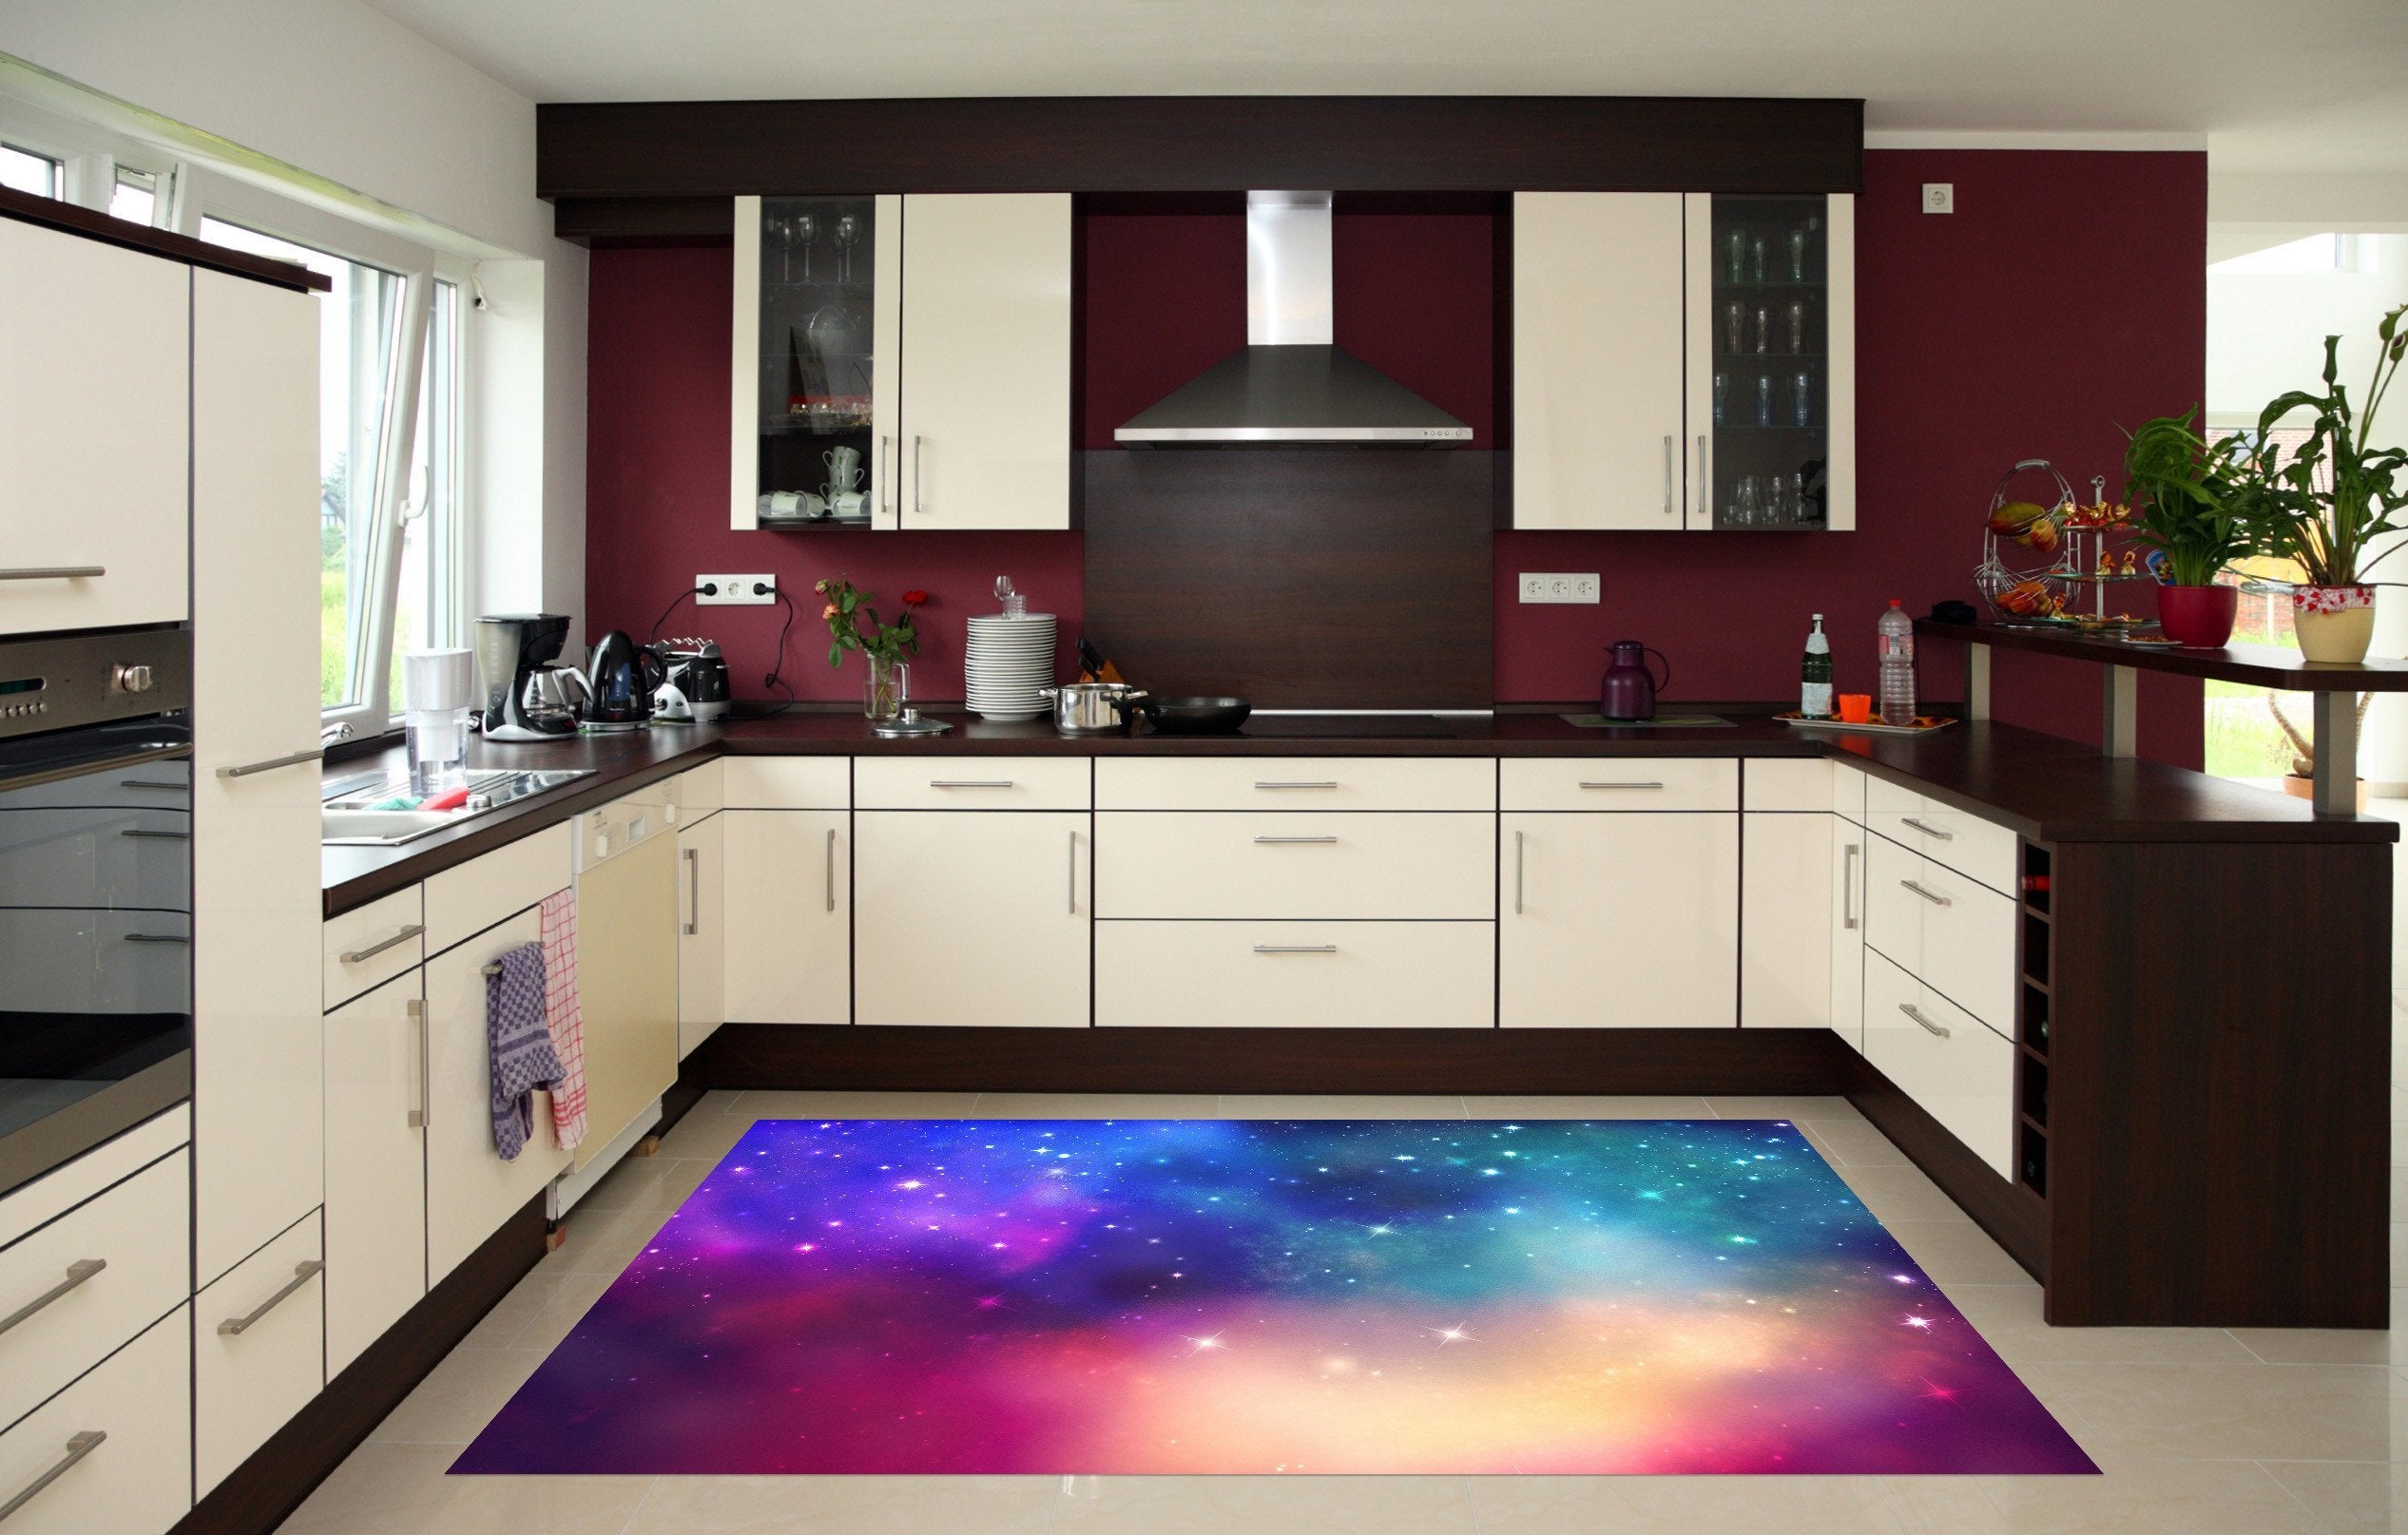 3D Colorful Stars Sky 639 Kitchen Mat Floor Mural Wallpaper AJ Wallpaper 